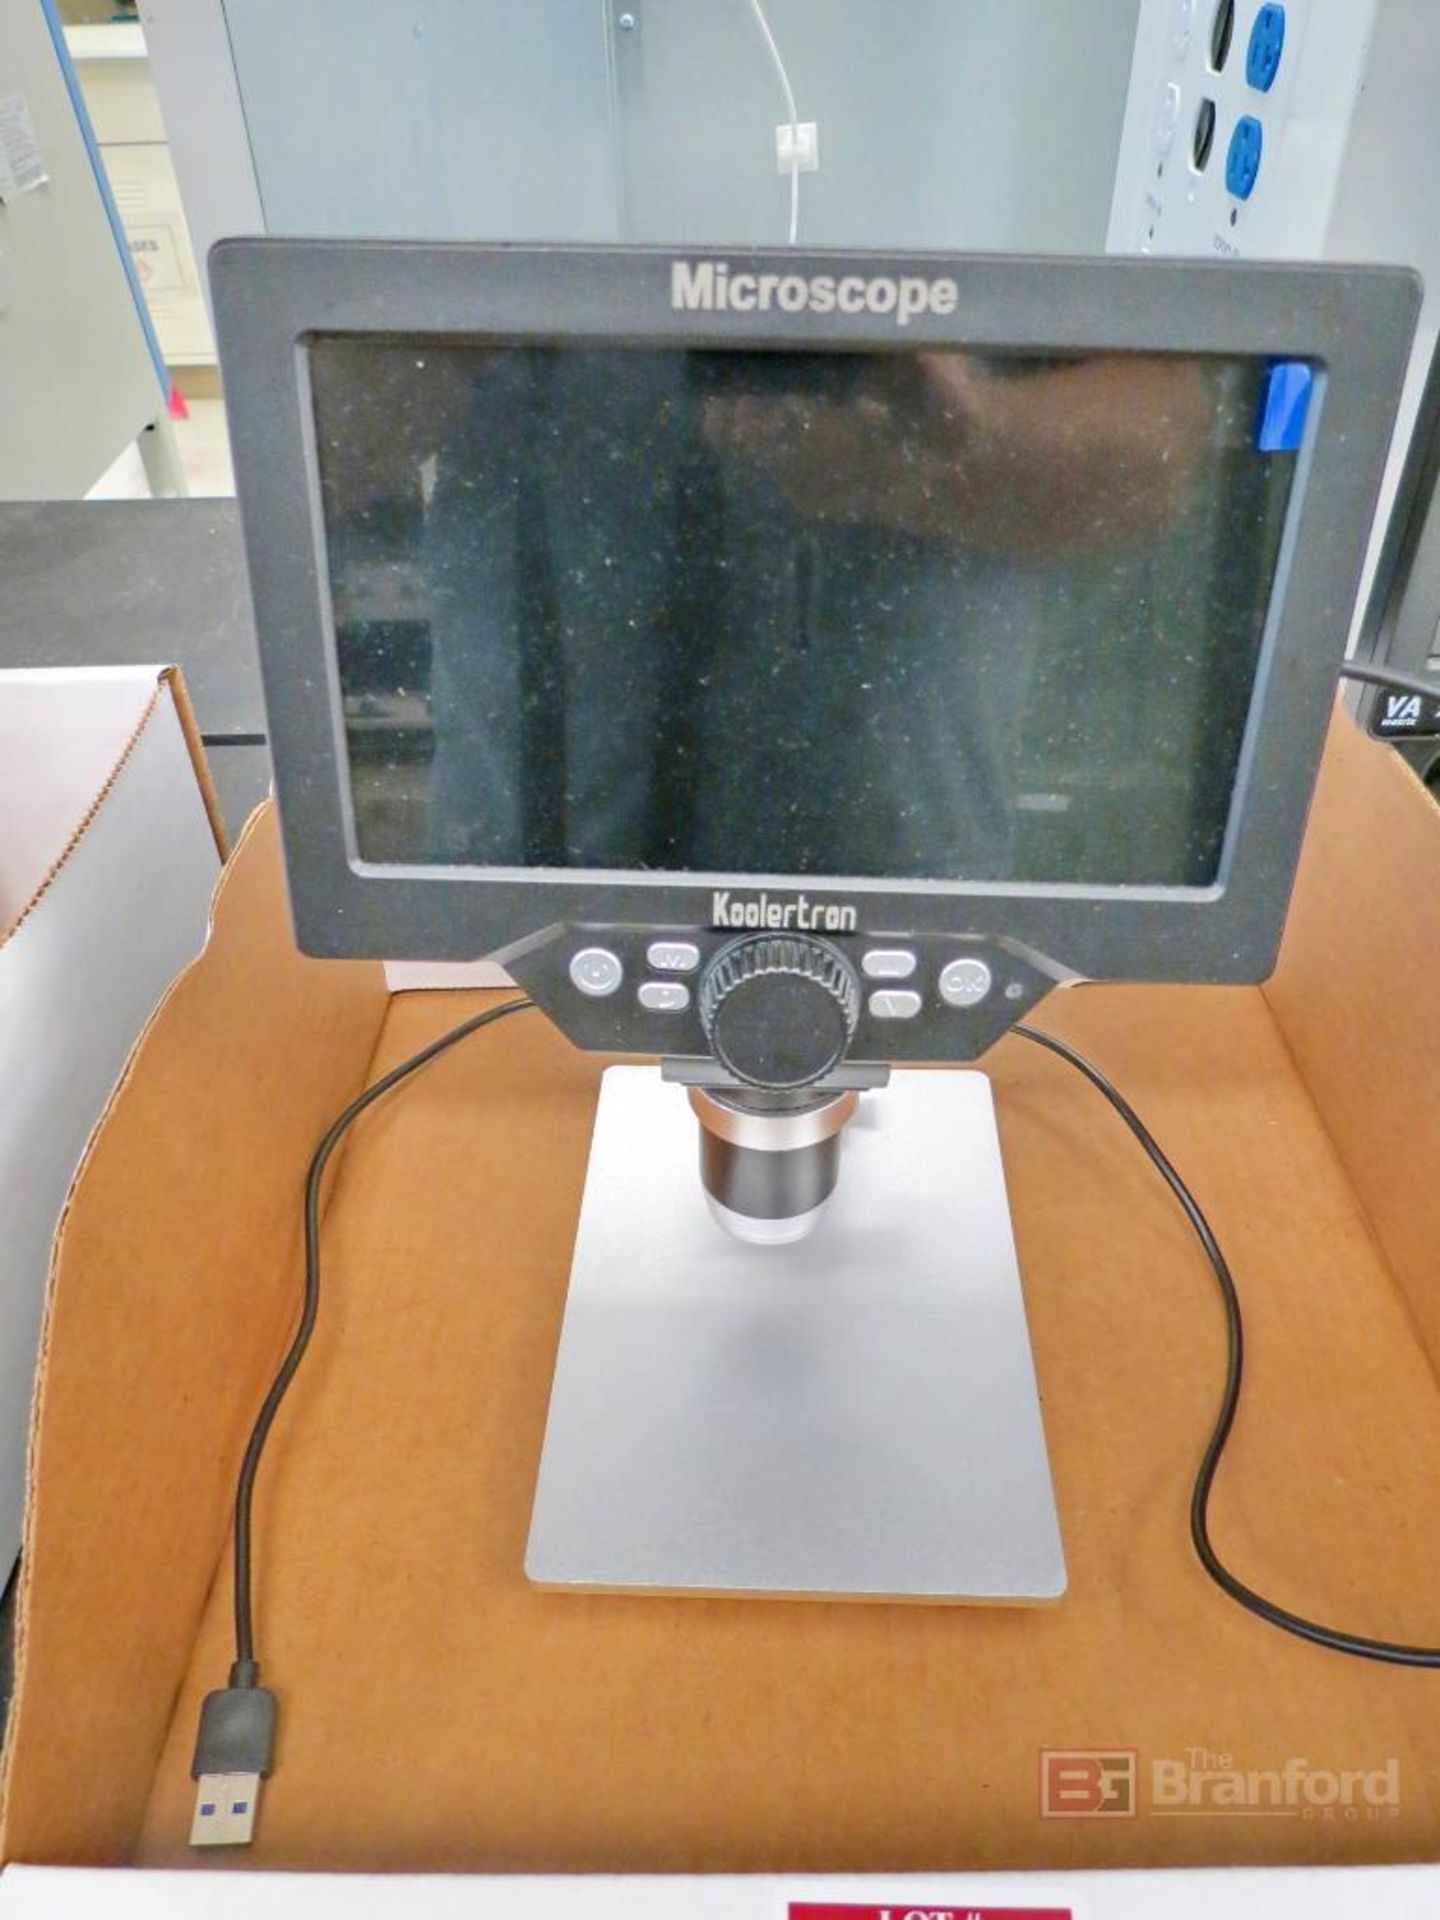 Koolertron Microscope